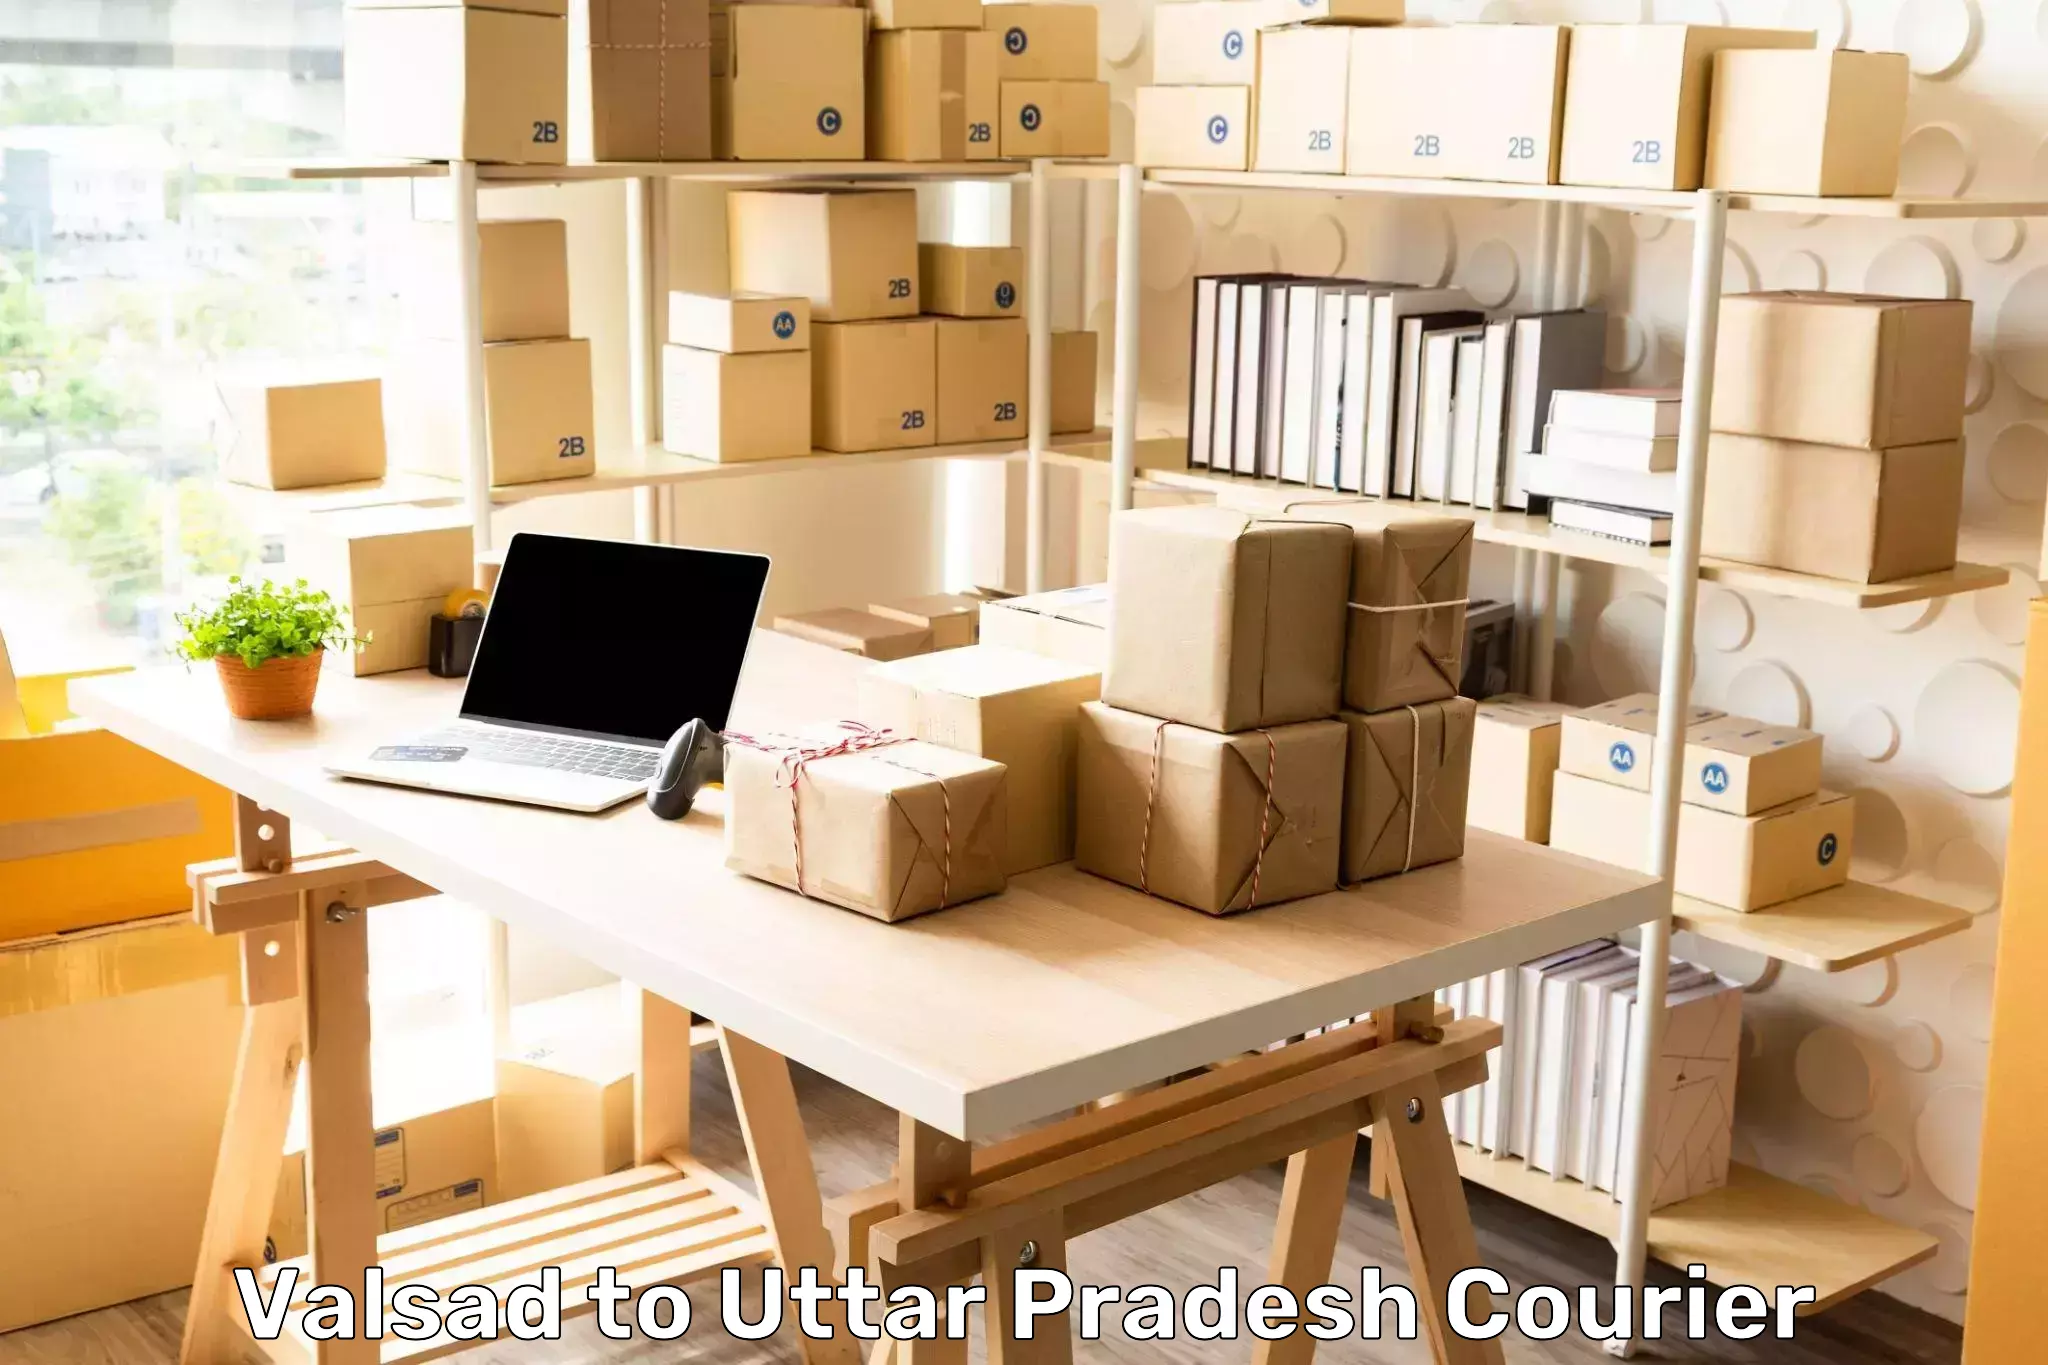 Advanced shipping technology Valsad to Uttar Pradesh